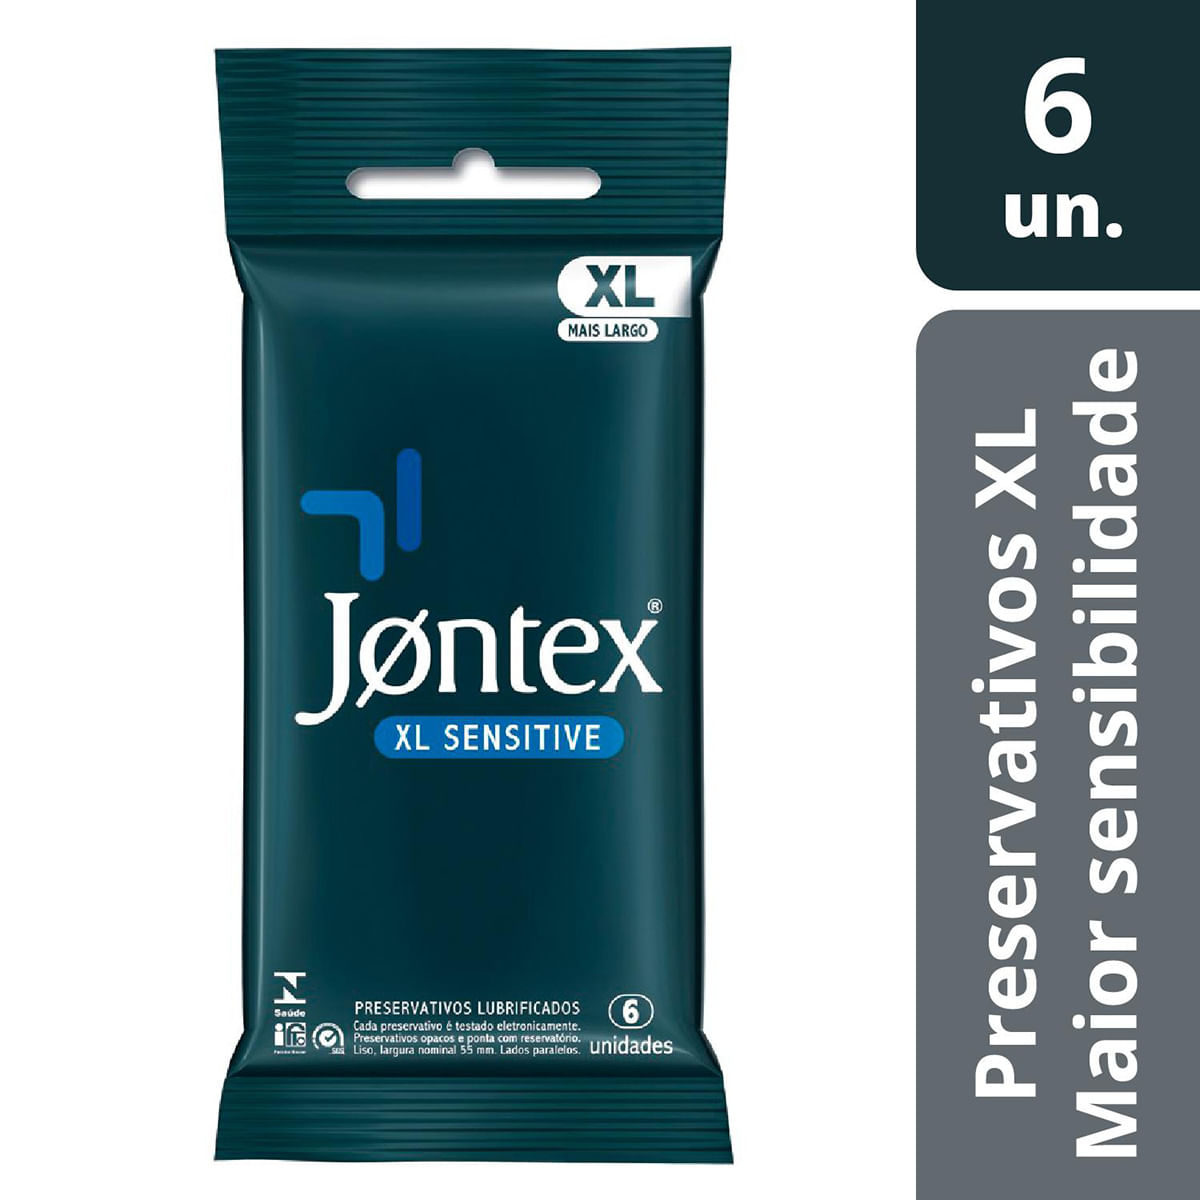 Preservativos Lubrificados XL Sensitive com 6 unidades Jontex